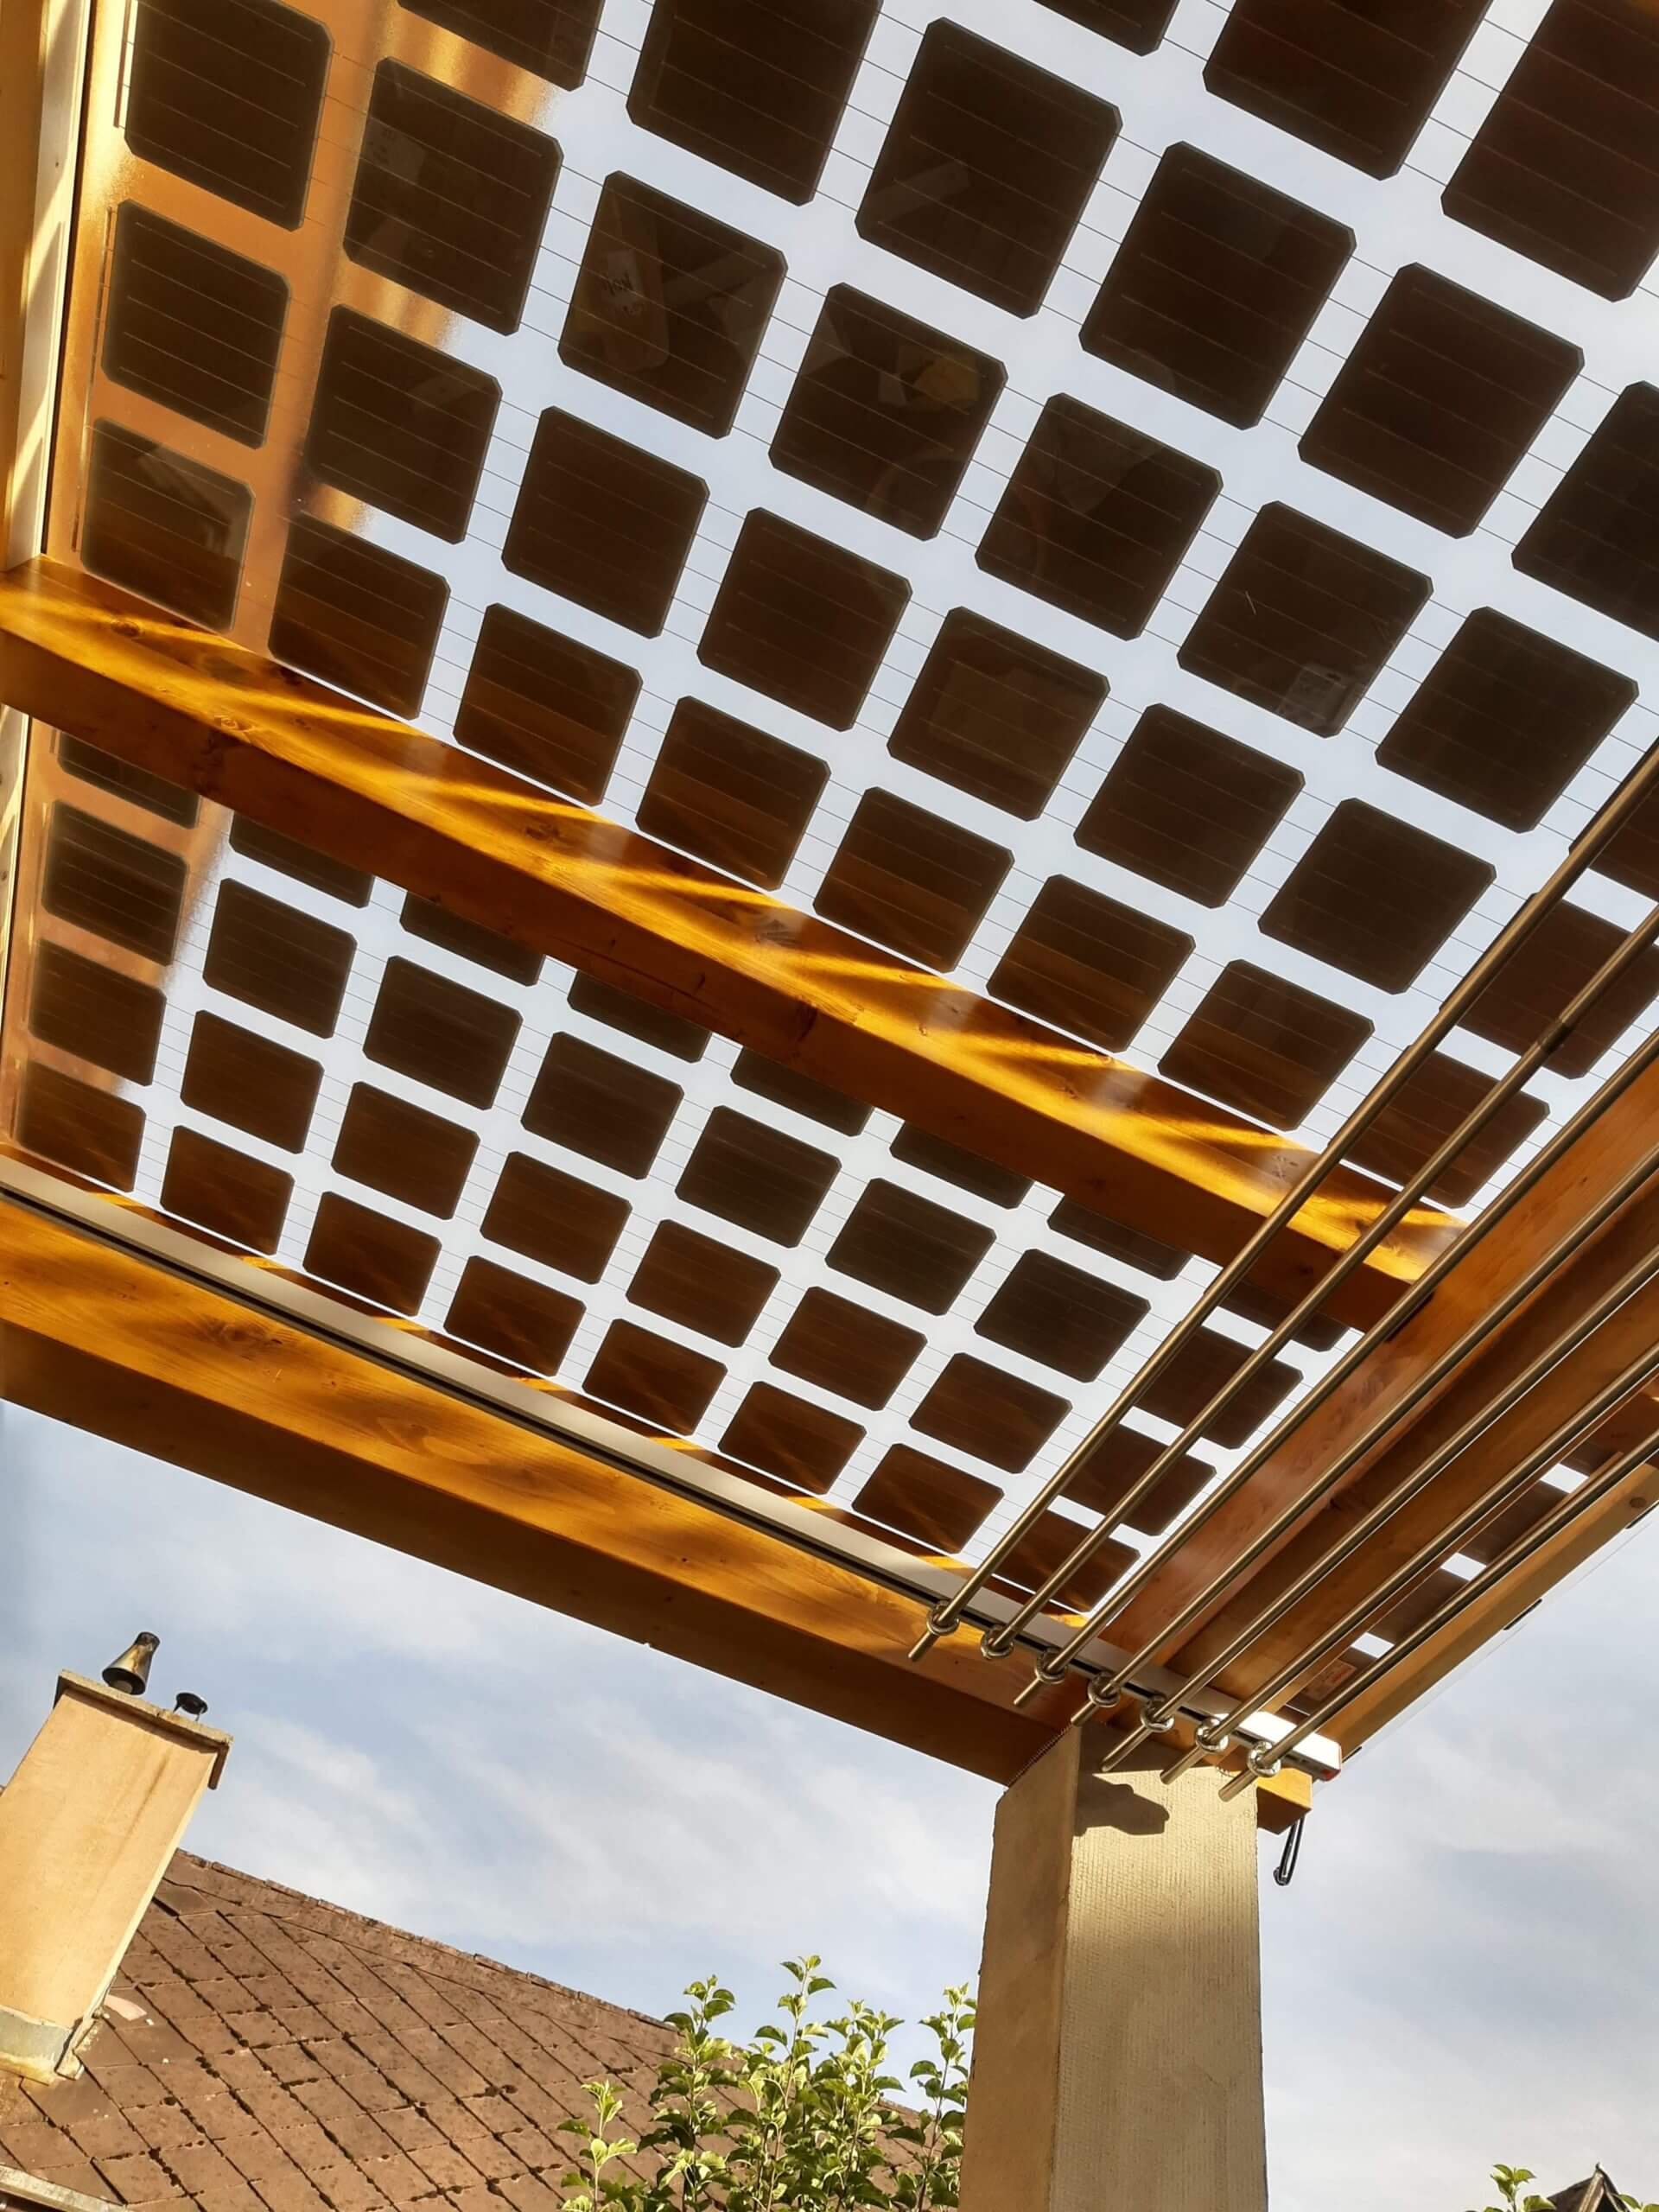 istalacia strechy na terase pokrytiu fotovoltaickymi panelmi s vykonom 2100W a striedacom Godwee 5000W